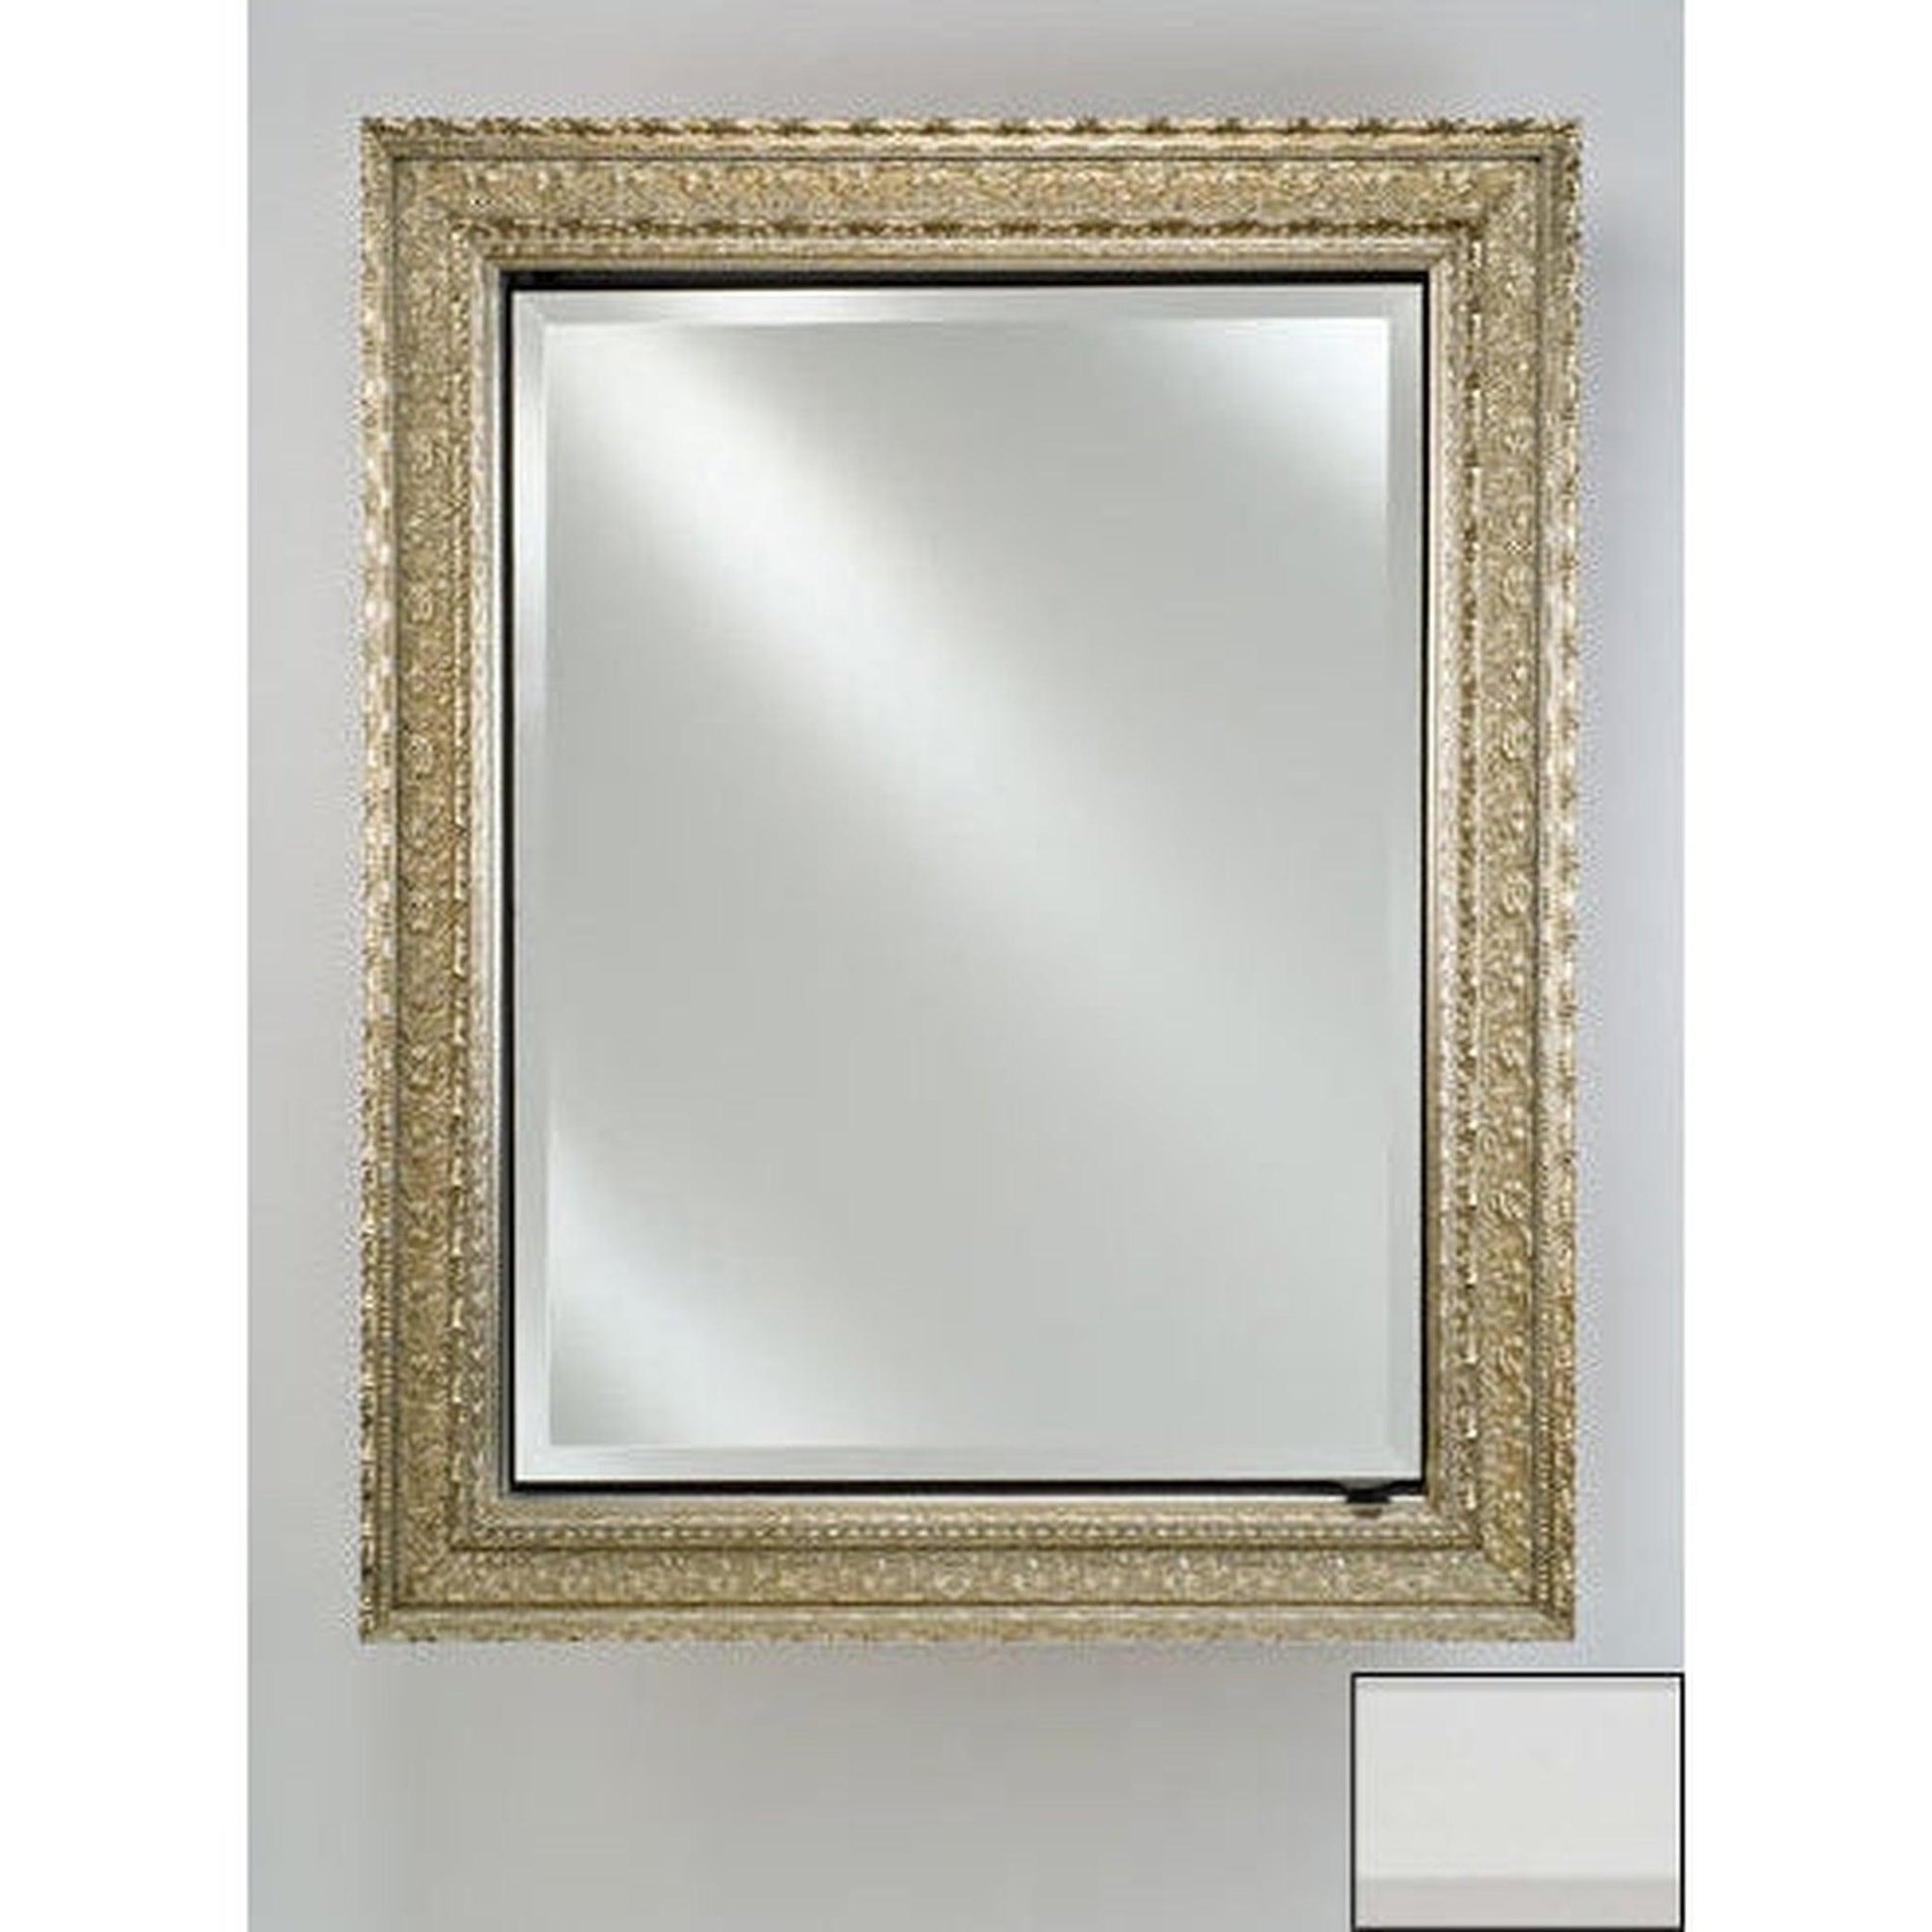 Afina Signature 17" x 26" Colorgrain White Recessed Reversible Hinged Single Door Medicine Cabinet With Beveled Edge Mirror